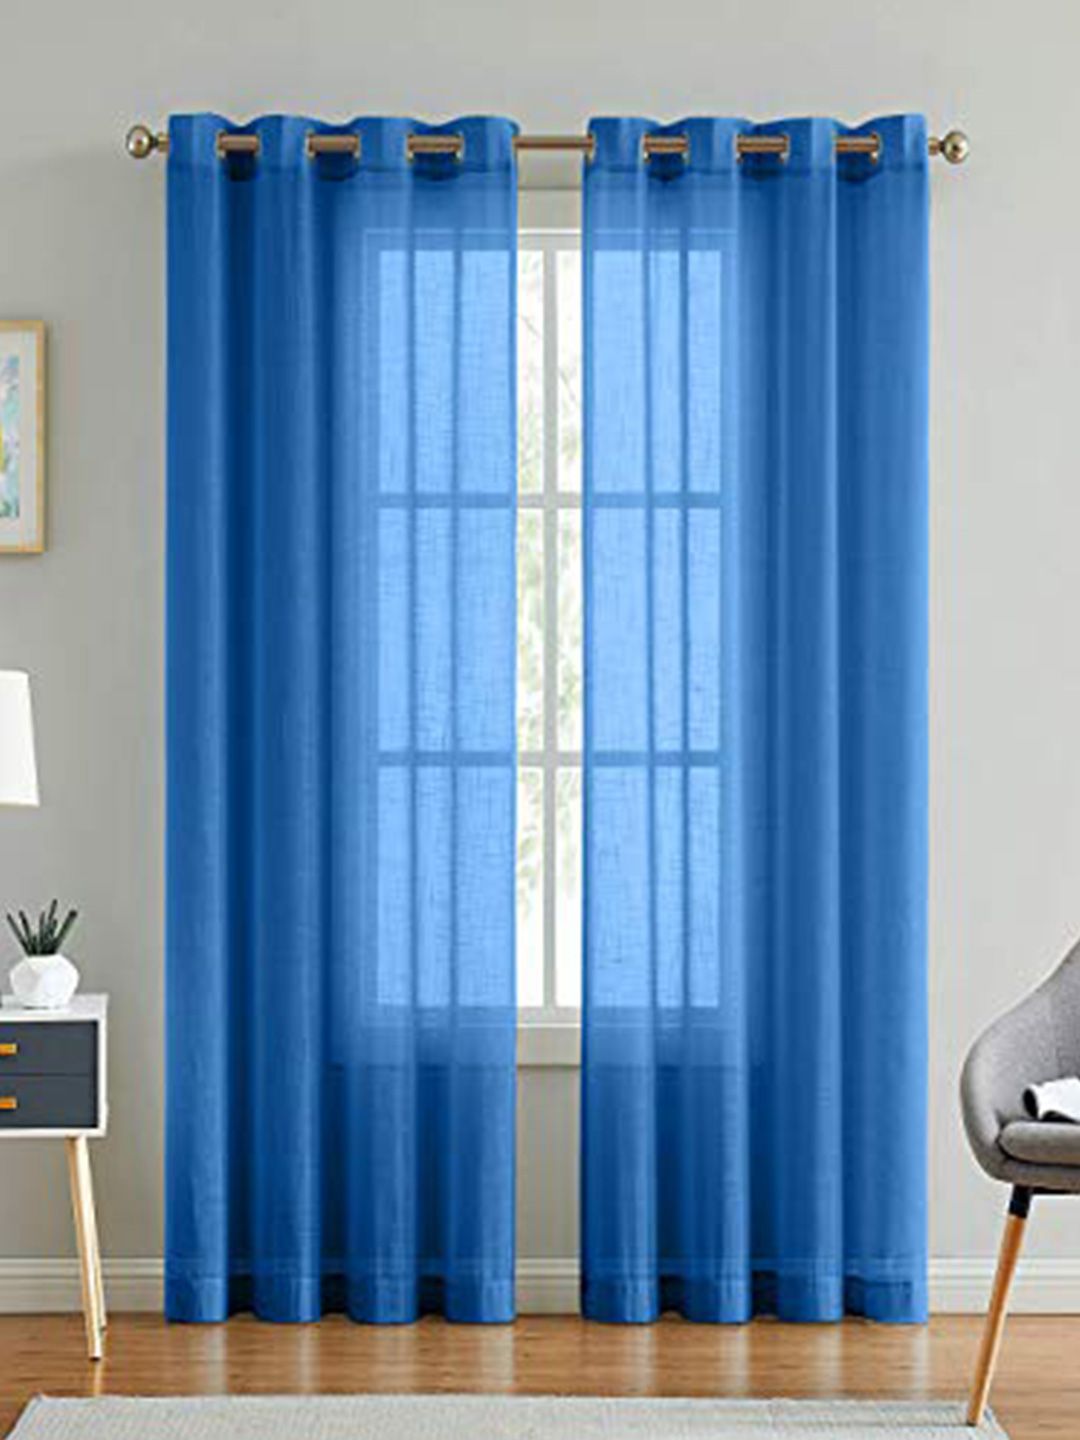 LINENWALAS Happy Sleeping Blue Set of 2 Sheer Door Curtain Price in India